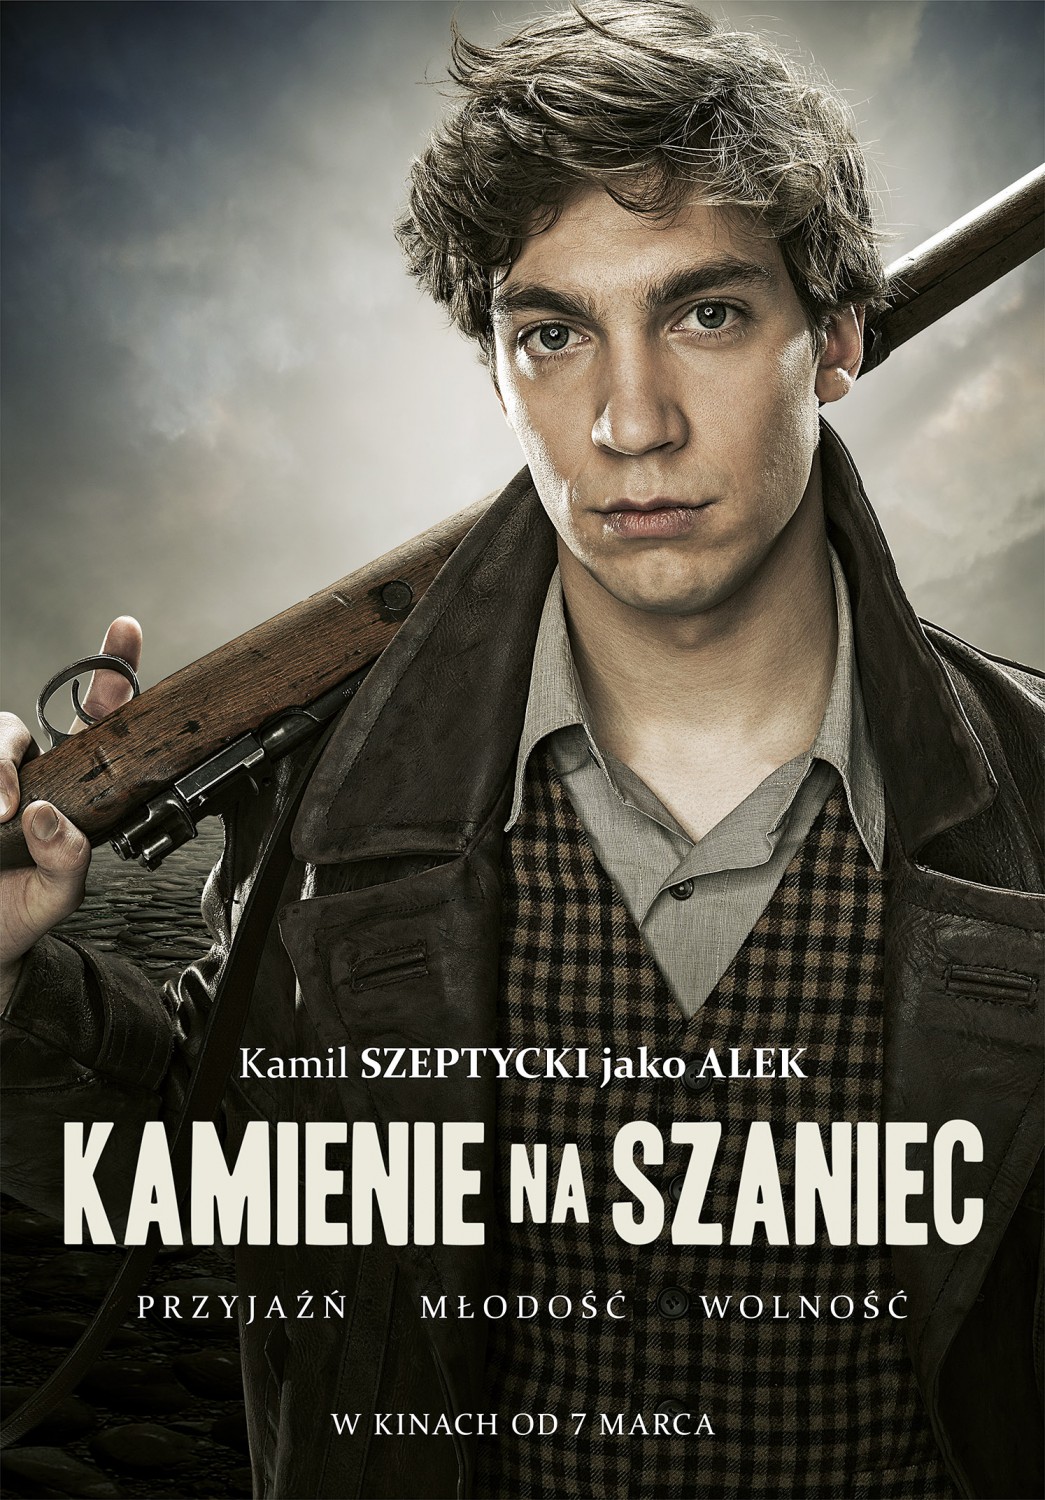 Extra Large Movie Poster Image for Kamienie na szaniec (#3 of 8)